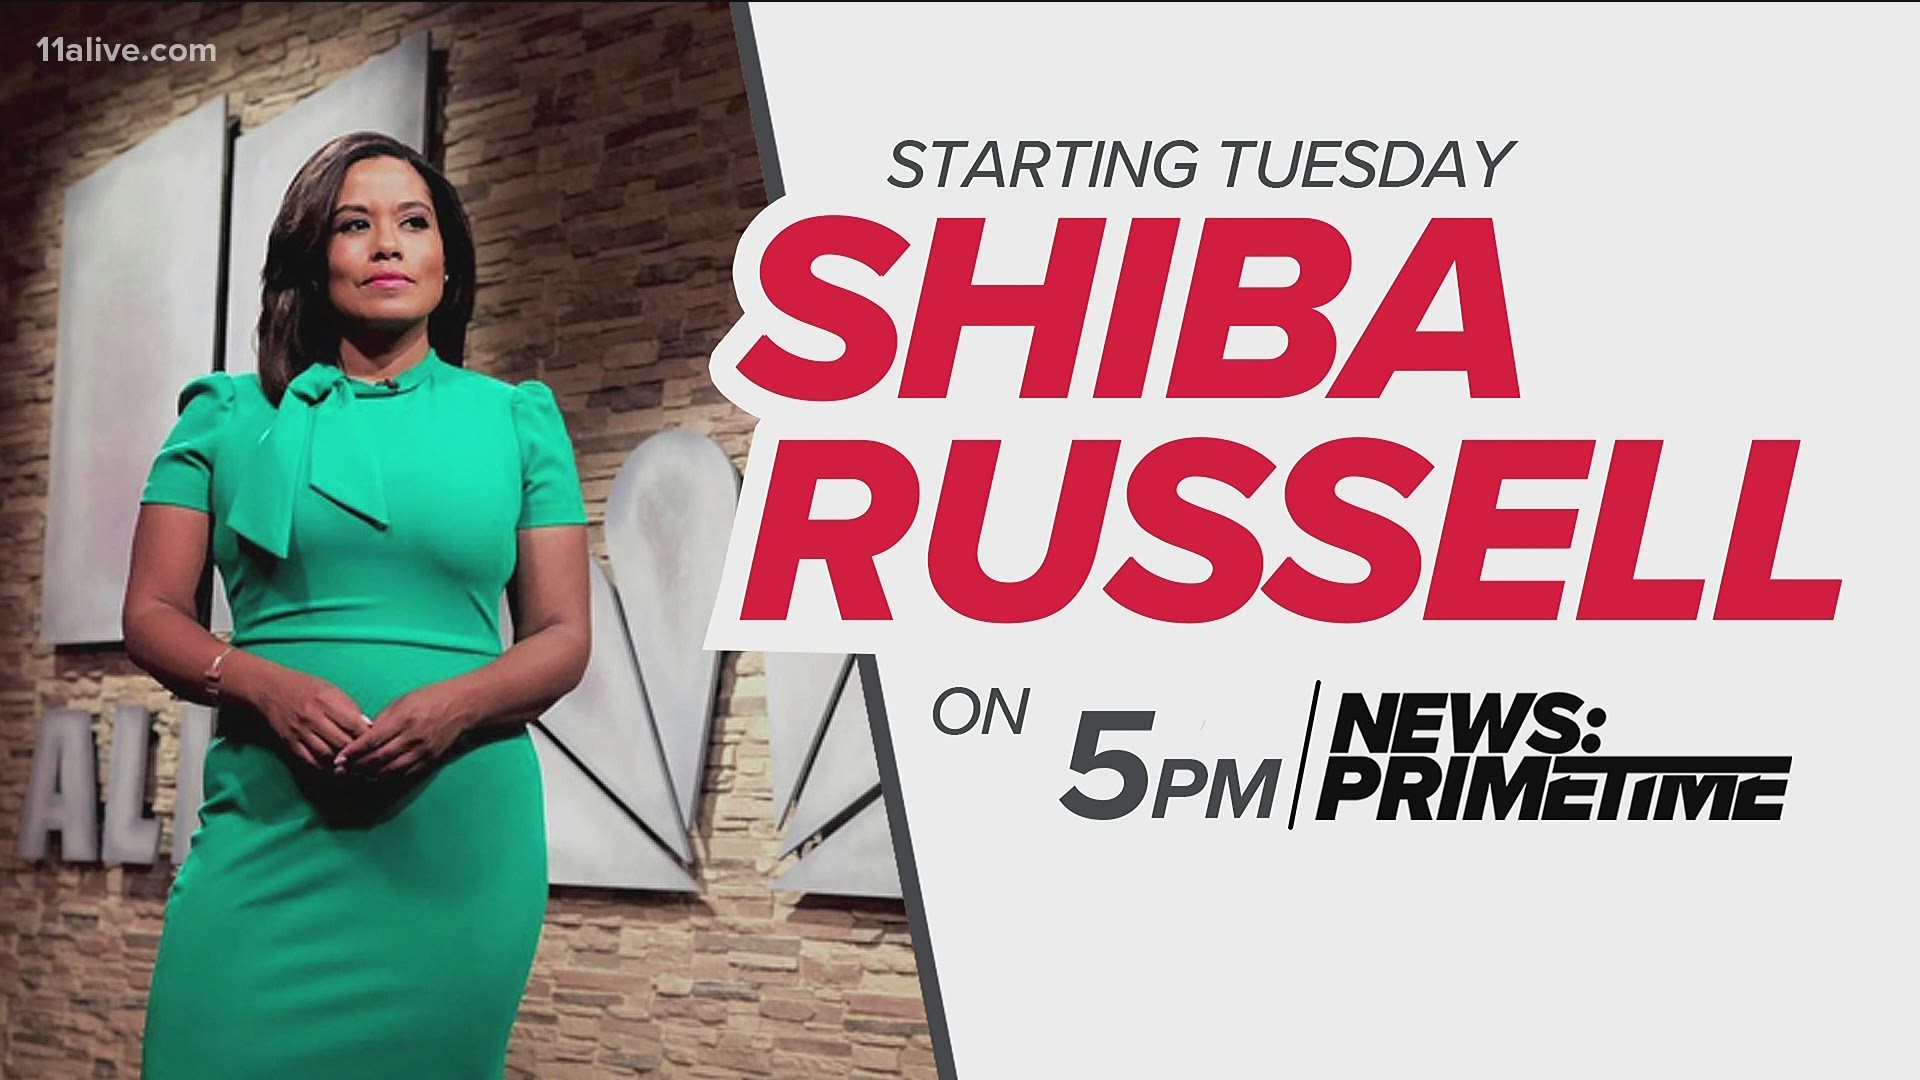 Aisha Howard will be joining Morning Rush starting next week!